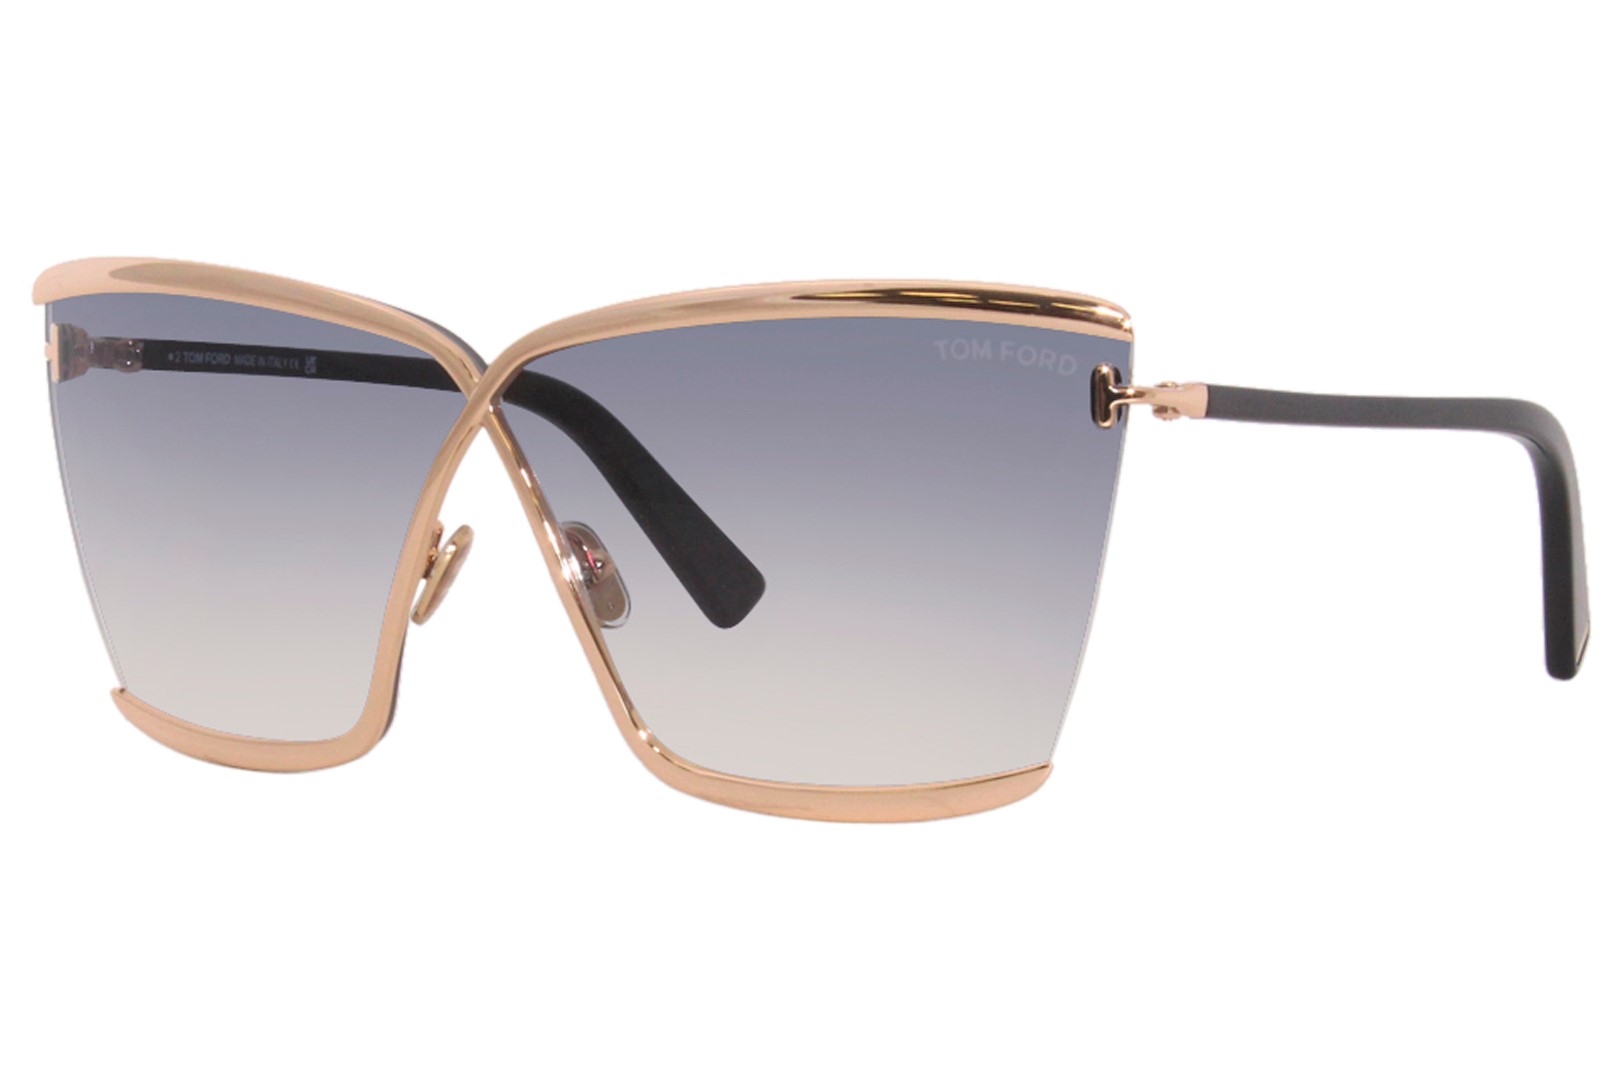 Krav affjedring Oversigt Tom Ford Elle-02 TF936 28B Sunglasses Women's Rose Gold/Grey-Brown Gradient  | EyeSpecs.com